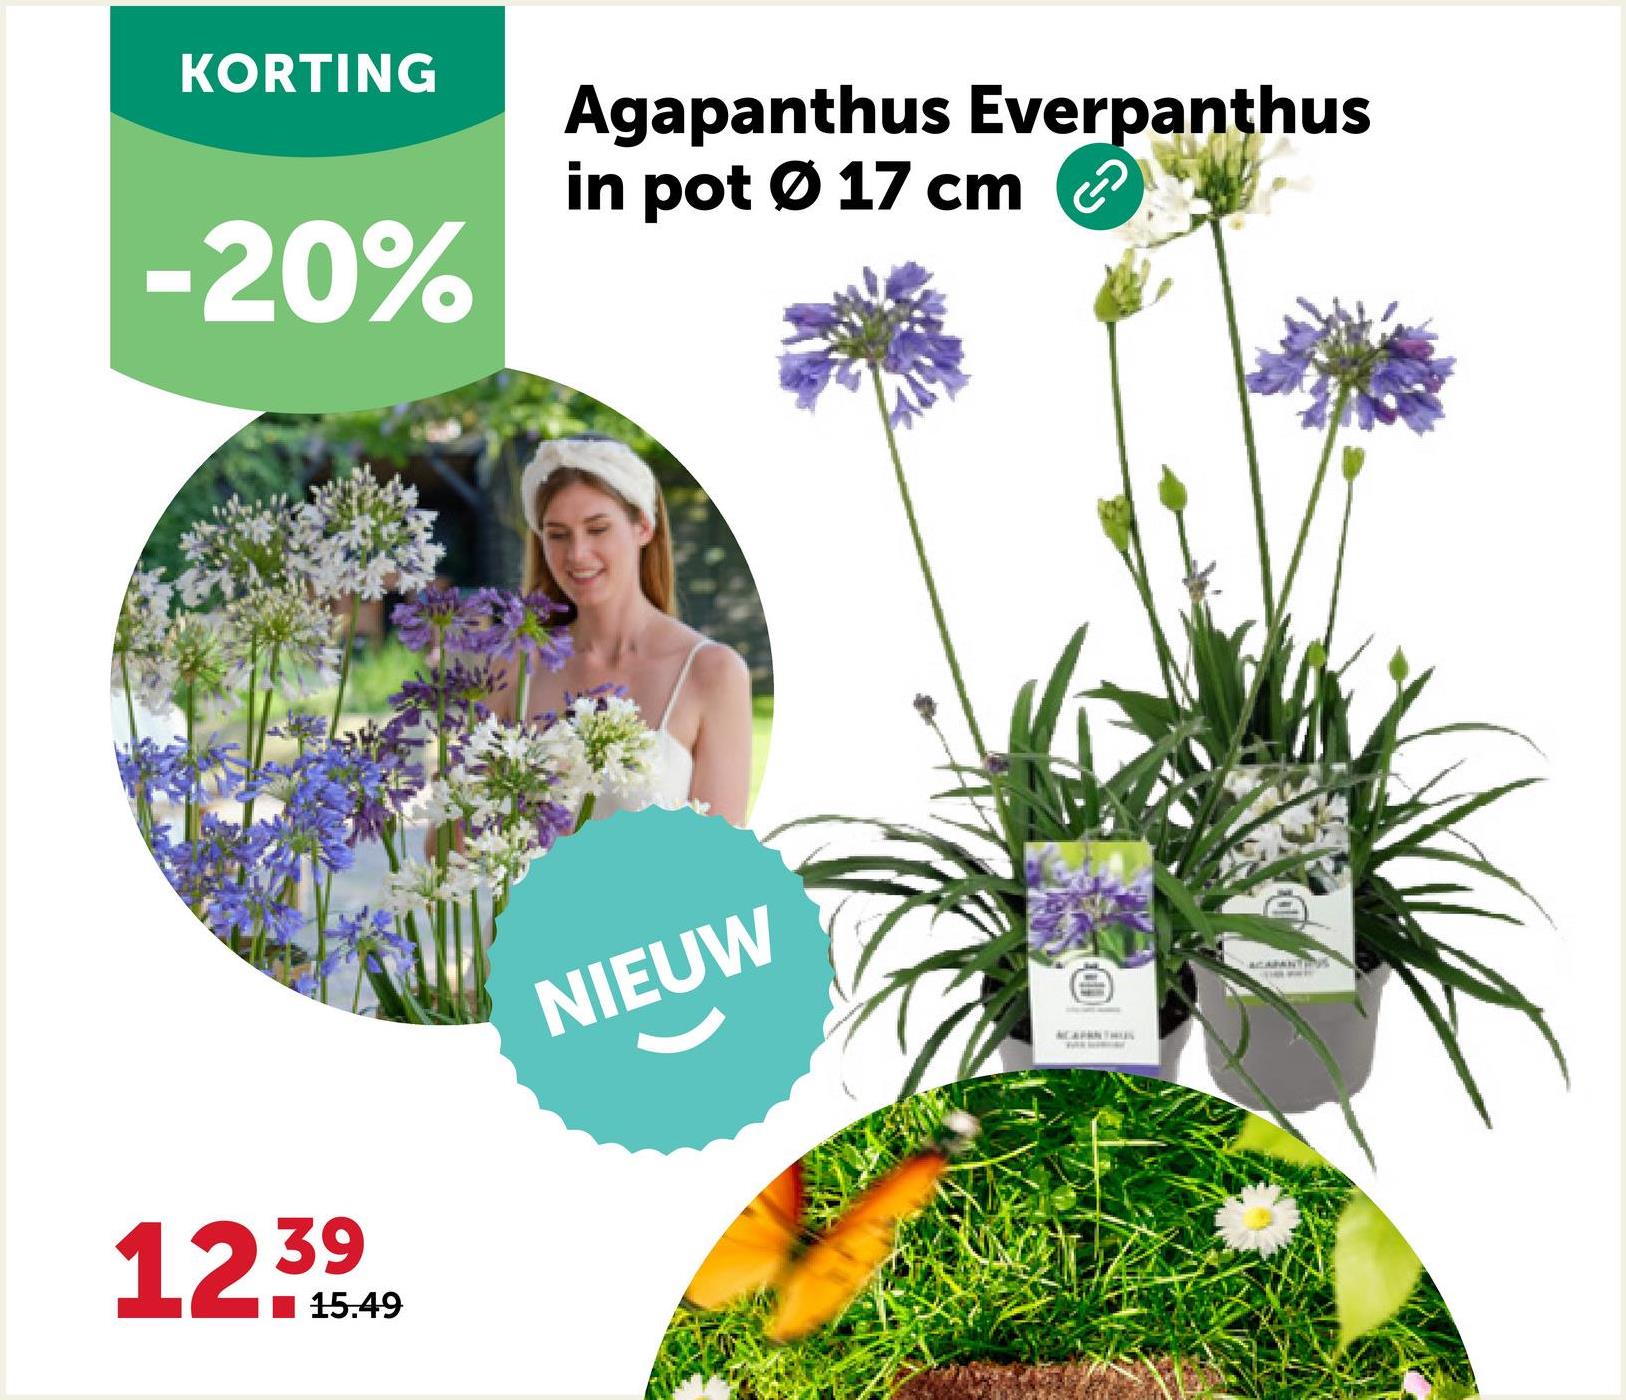 KORTING
-20%
Agapanthus Everpanthus
in pot Ø 17 cm
12.39
15.49
NIEUW
ACAPANTHUS
ACARAN